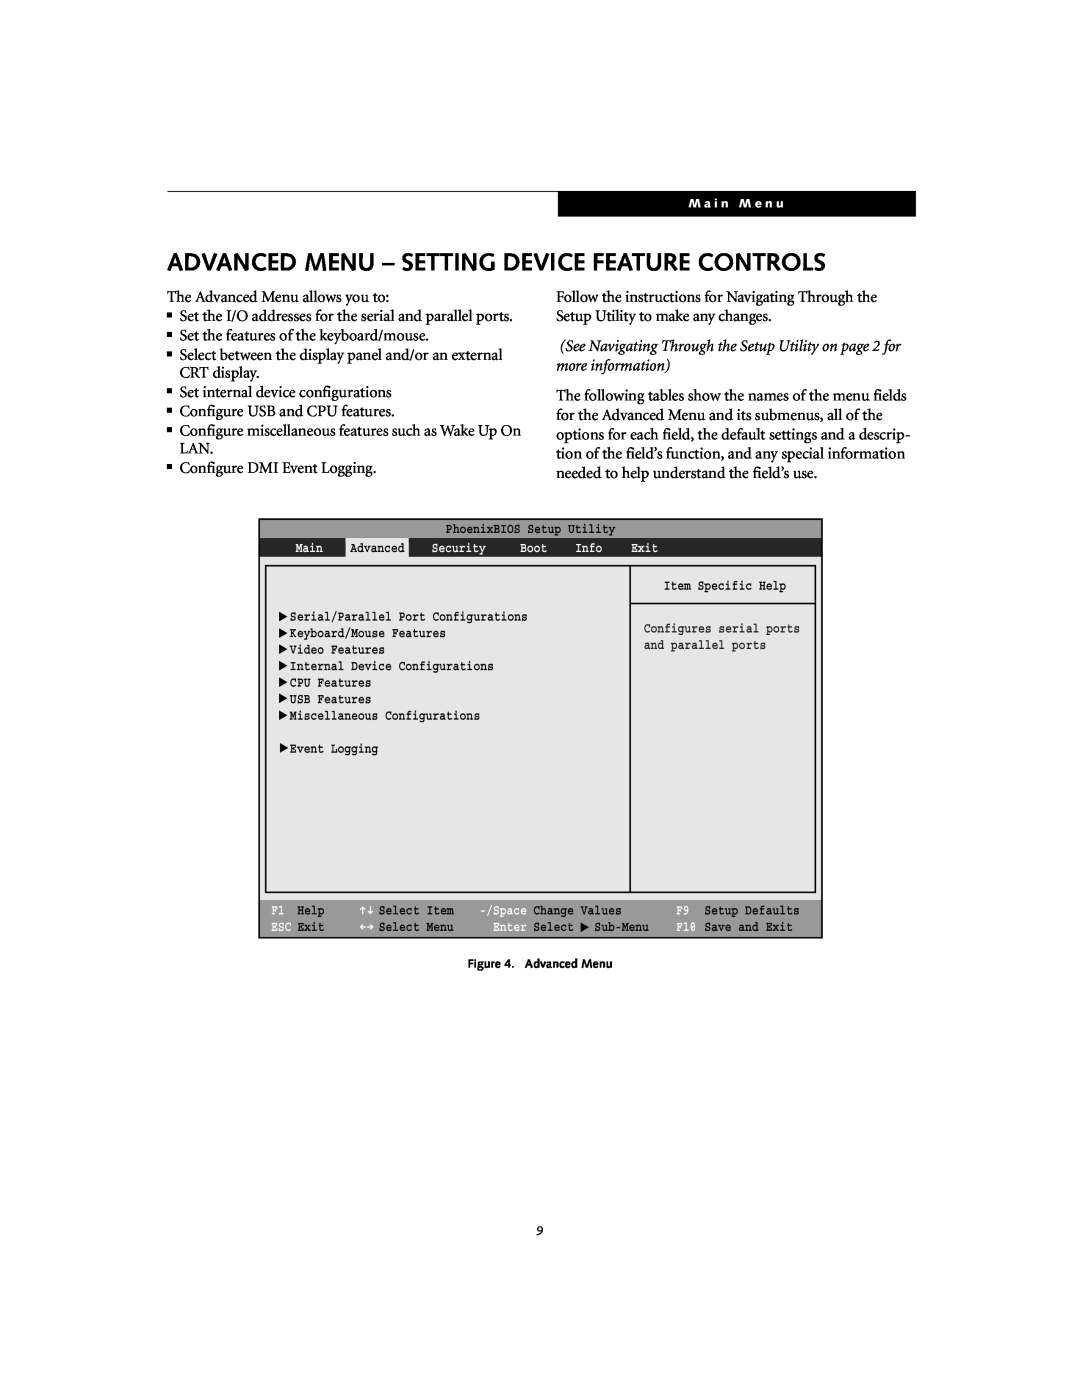 Fujitsu S7020D manual Advanced Menu - Setting Device Feature Controls 